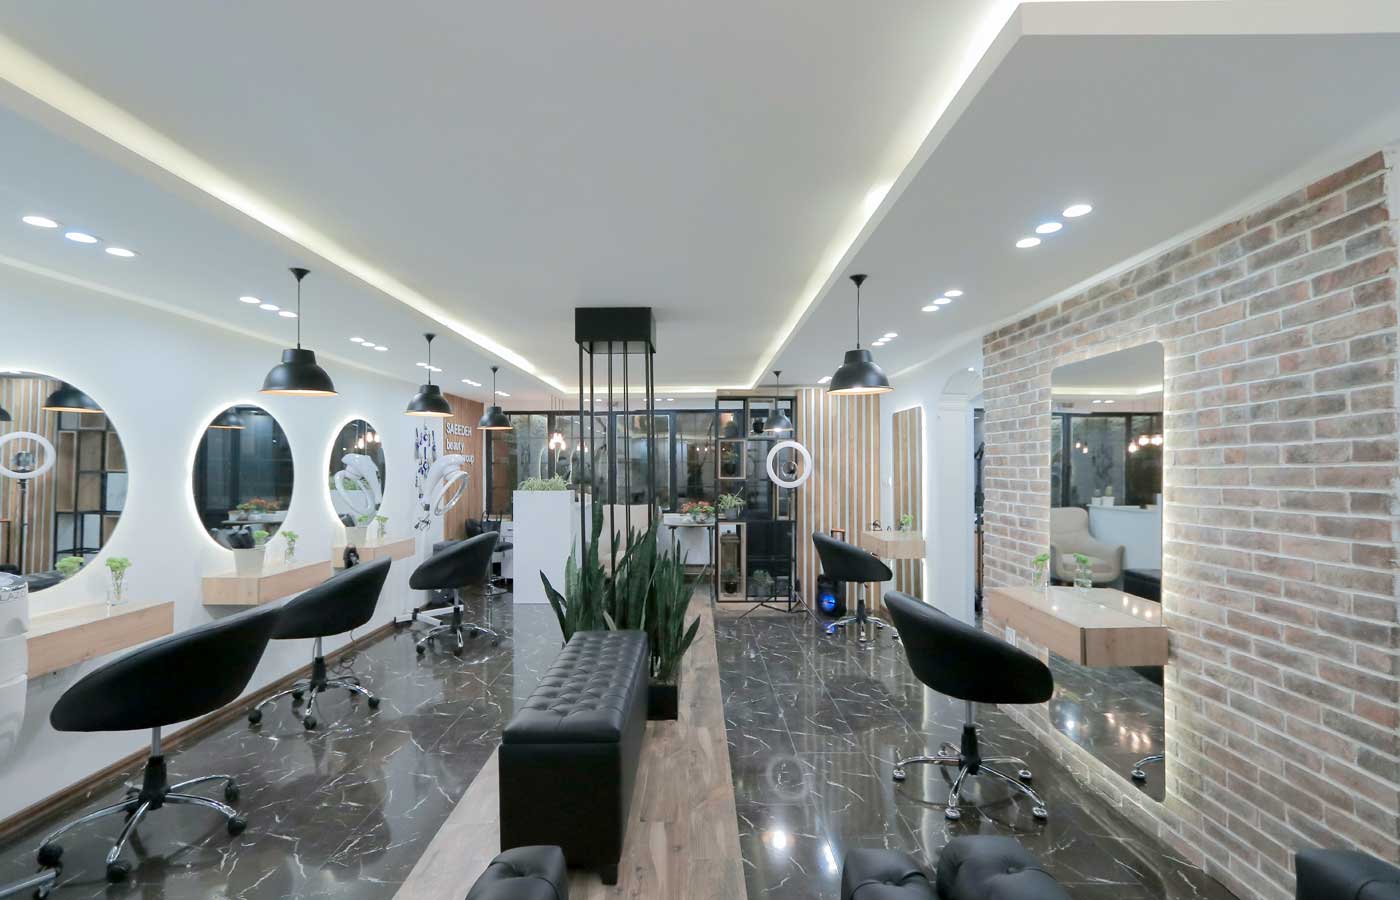 Interior of a hair salon business